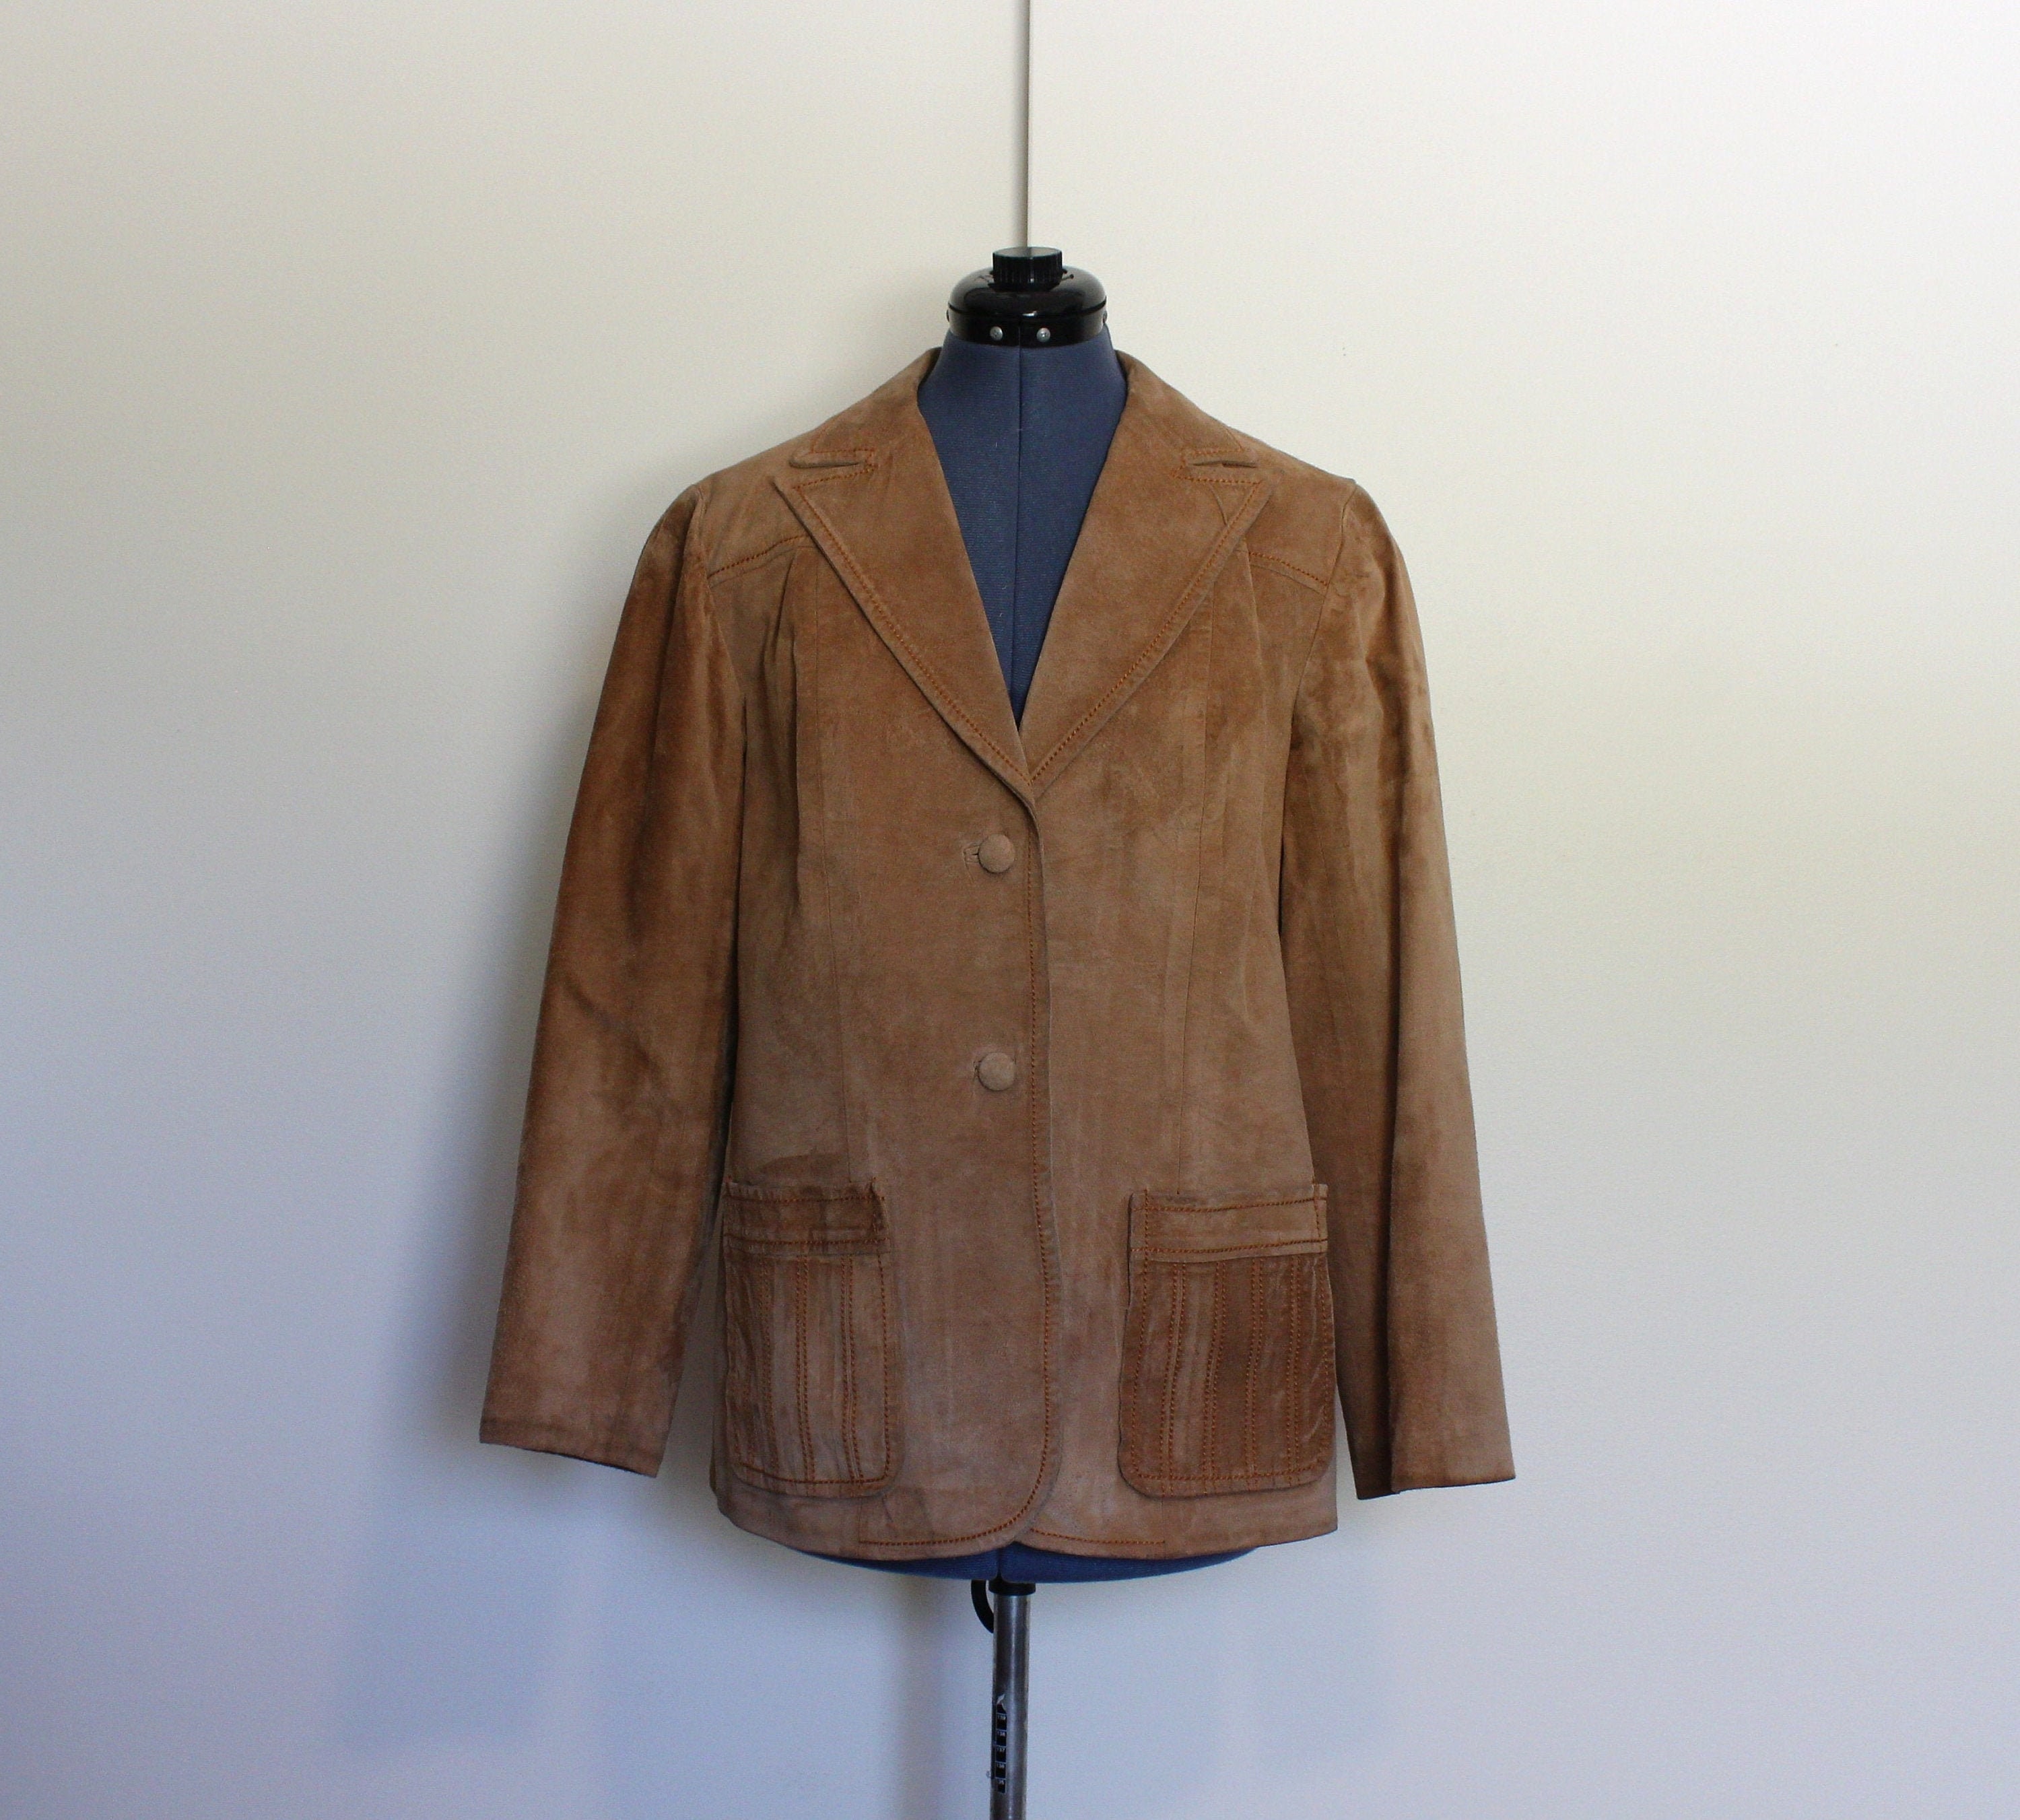 1960s Coats and Jackets Vintage 1960s Genuine Leather Palena Knitwear Womens Suede Jacket Sport Coat, Size 8 $84.00 AT vintagedancer.com